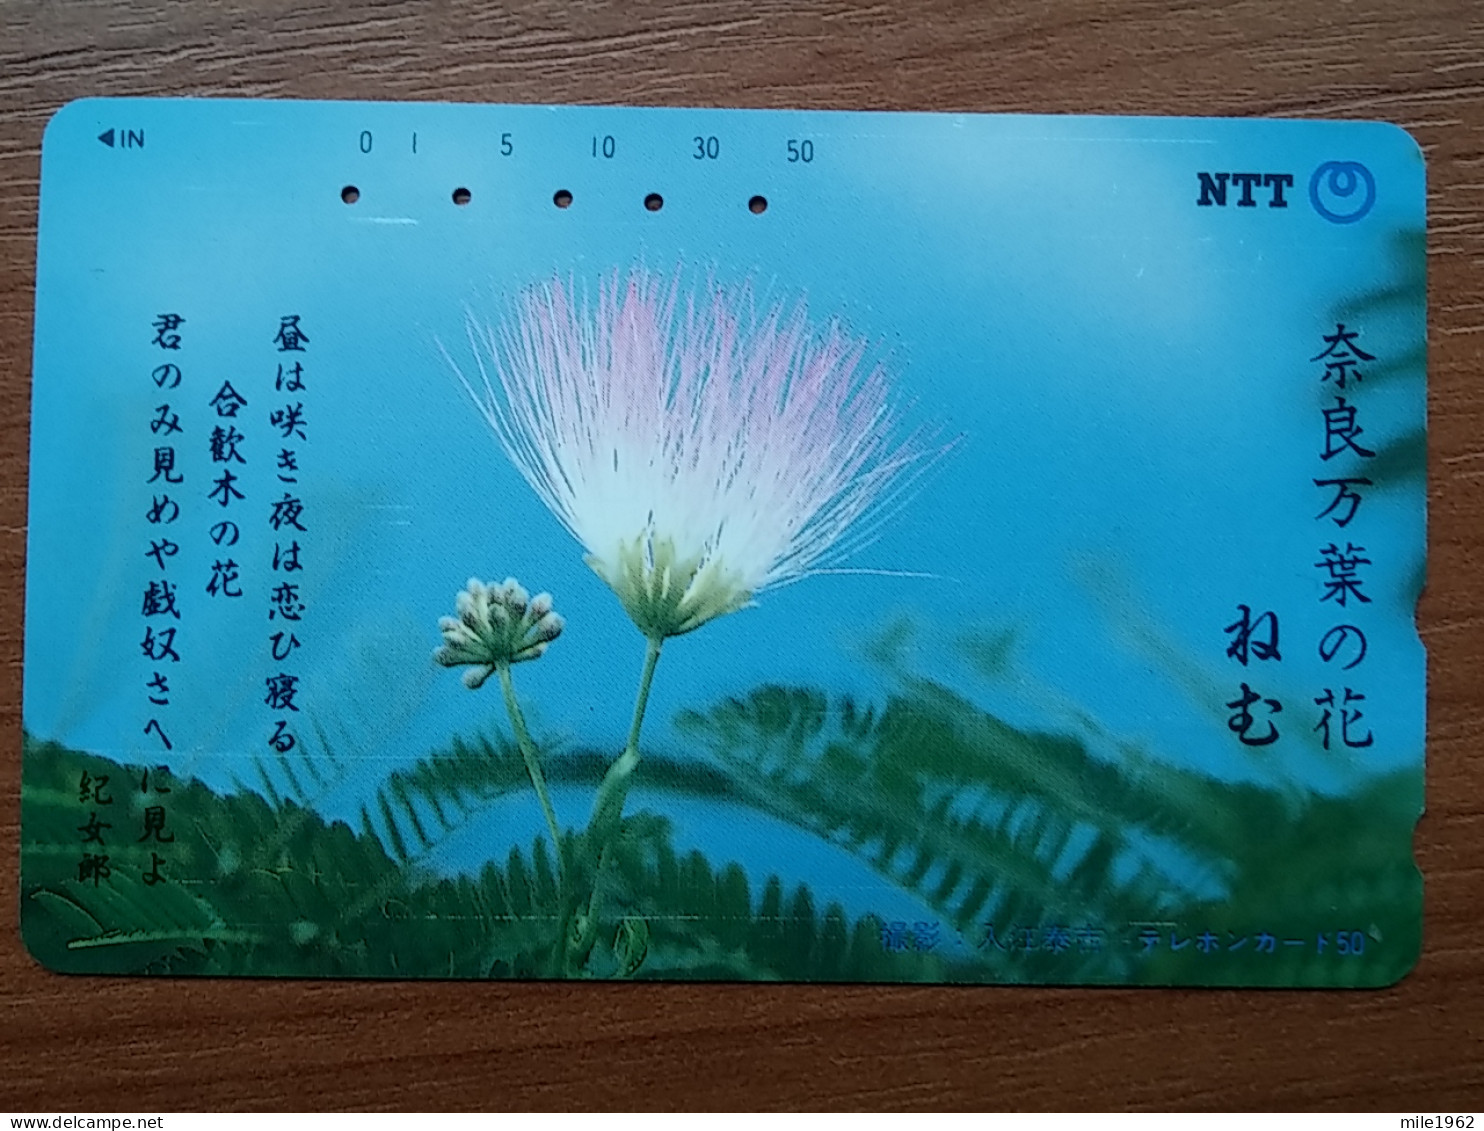 T-382 - JAPAN, Japon, Nipon, TELECARD, PHONECARD, Flower, Fleur, NTT 331-249 - Blumen